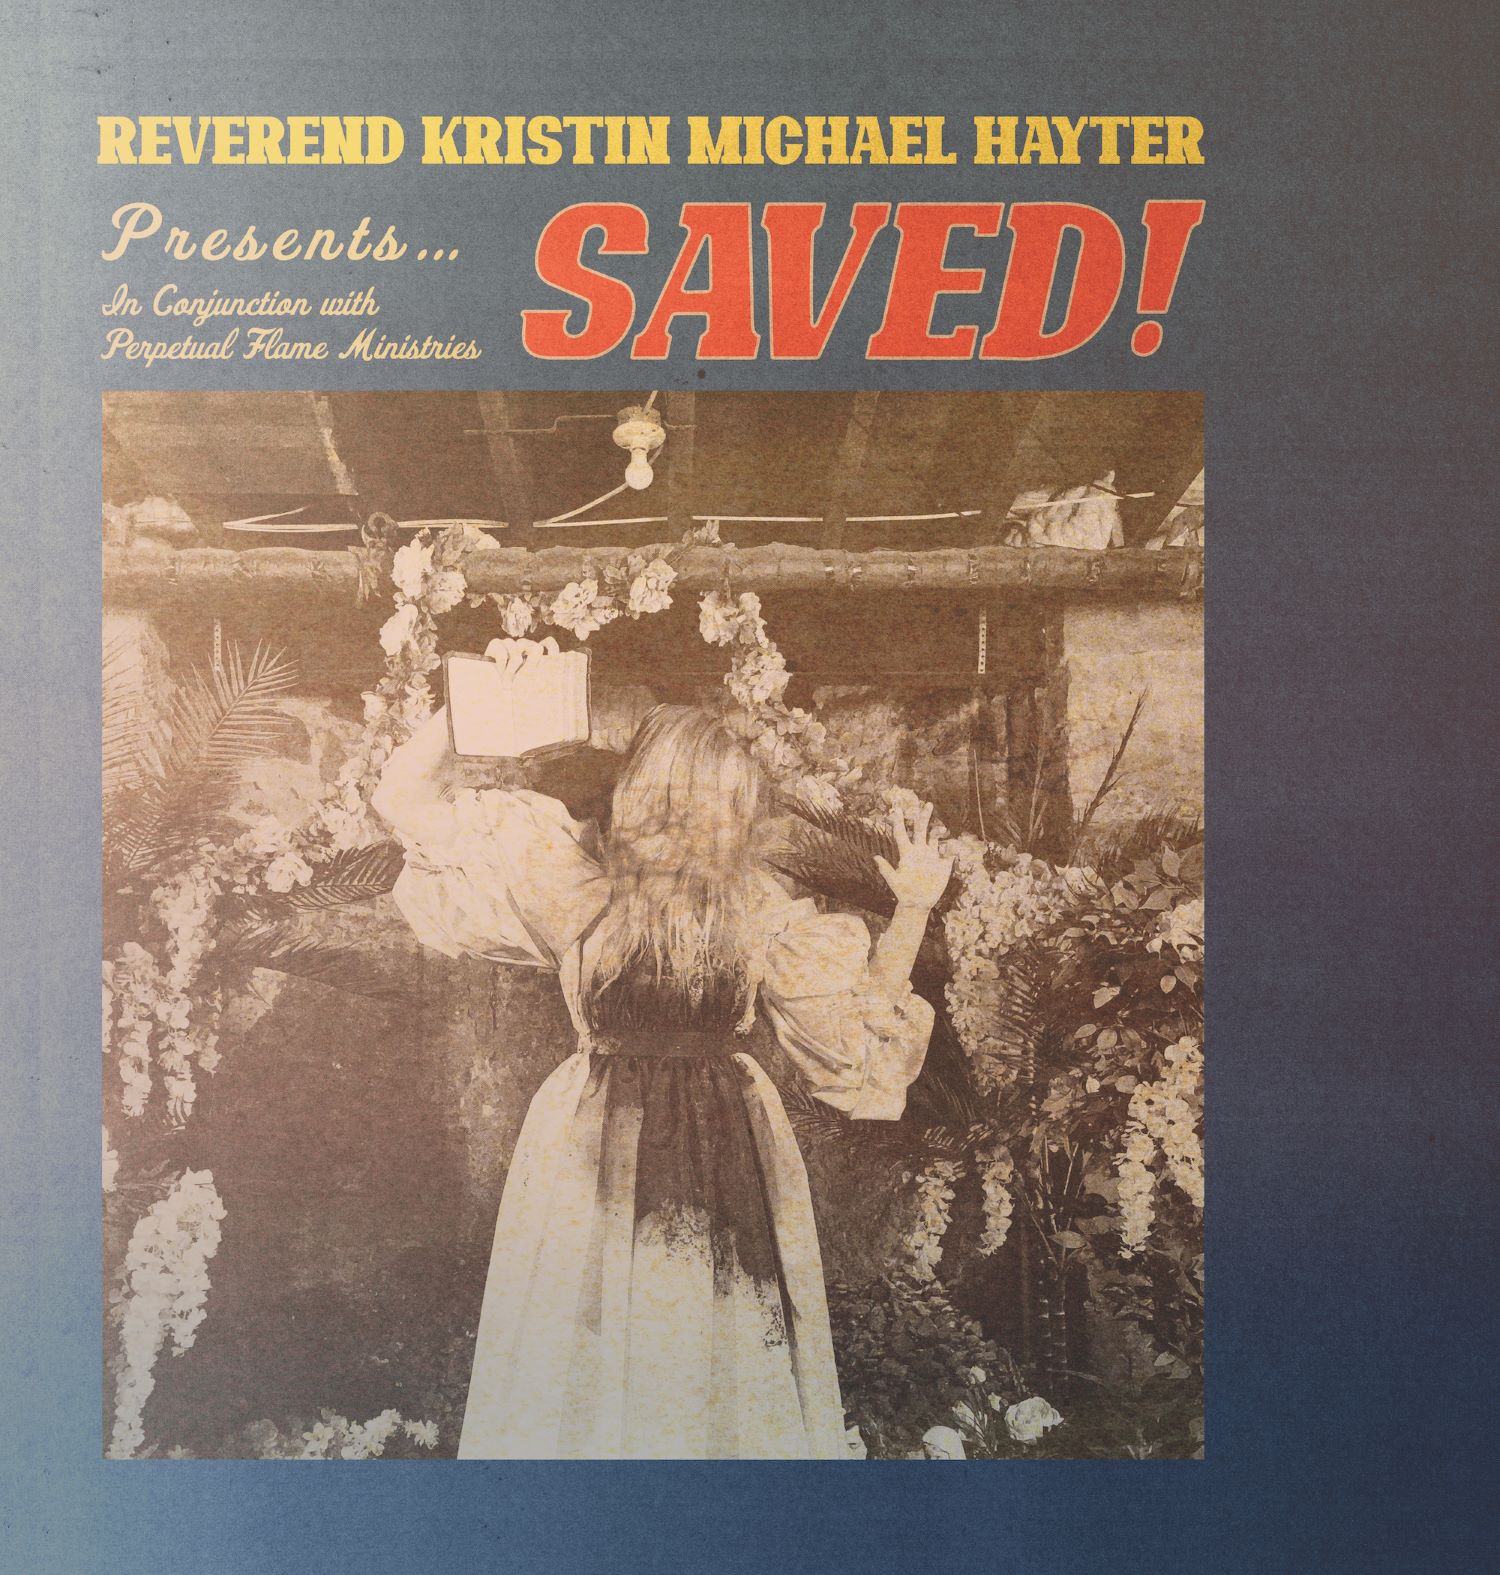 SAVED! - Reverend Kristin Michael Hayter